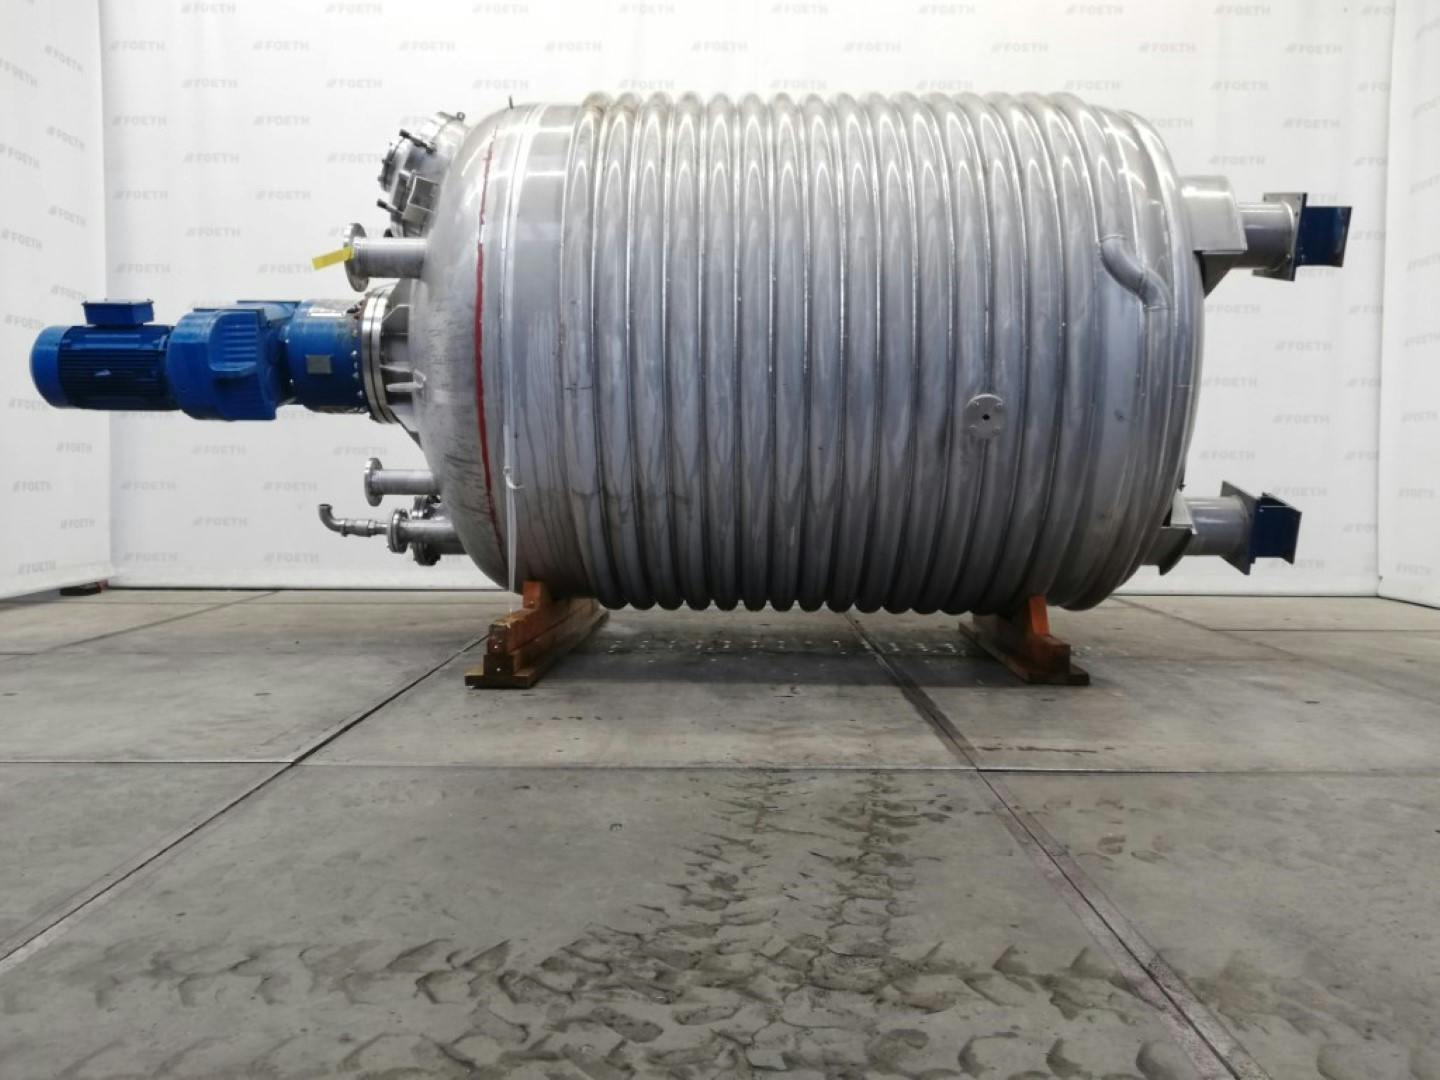 Rudert Edelstahl-Technik Reaktor 10m3 - Reactor de aço inoxidável - image 1